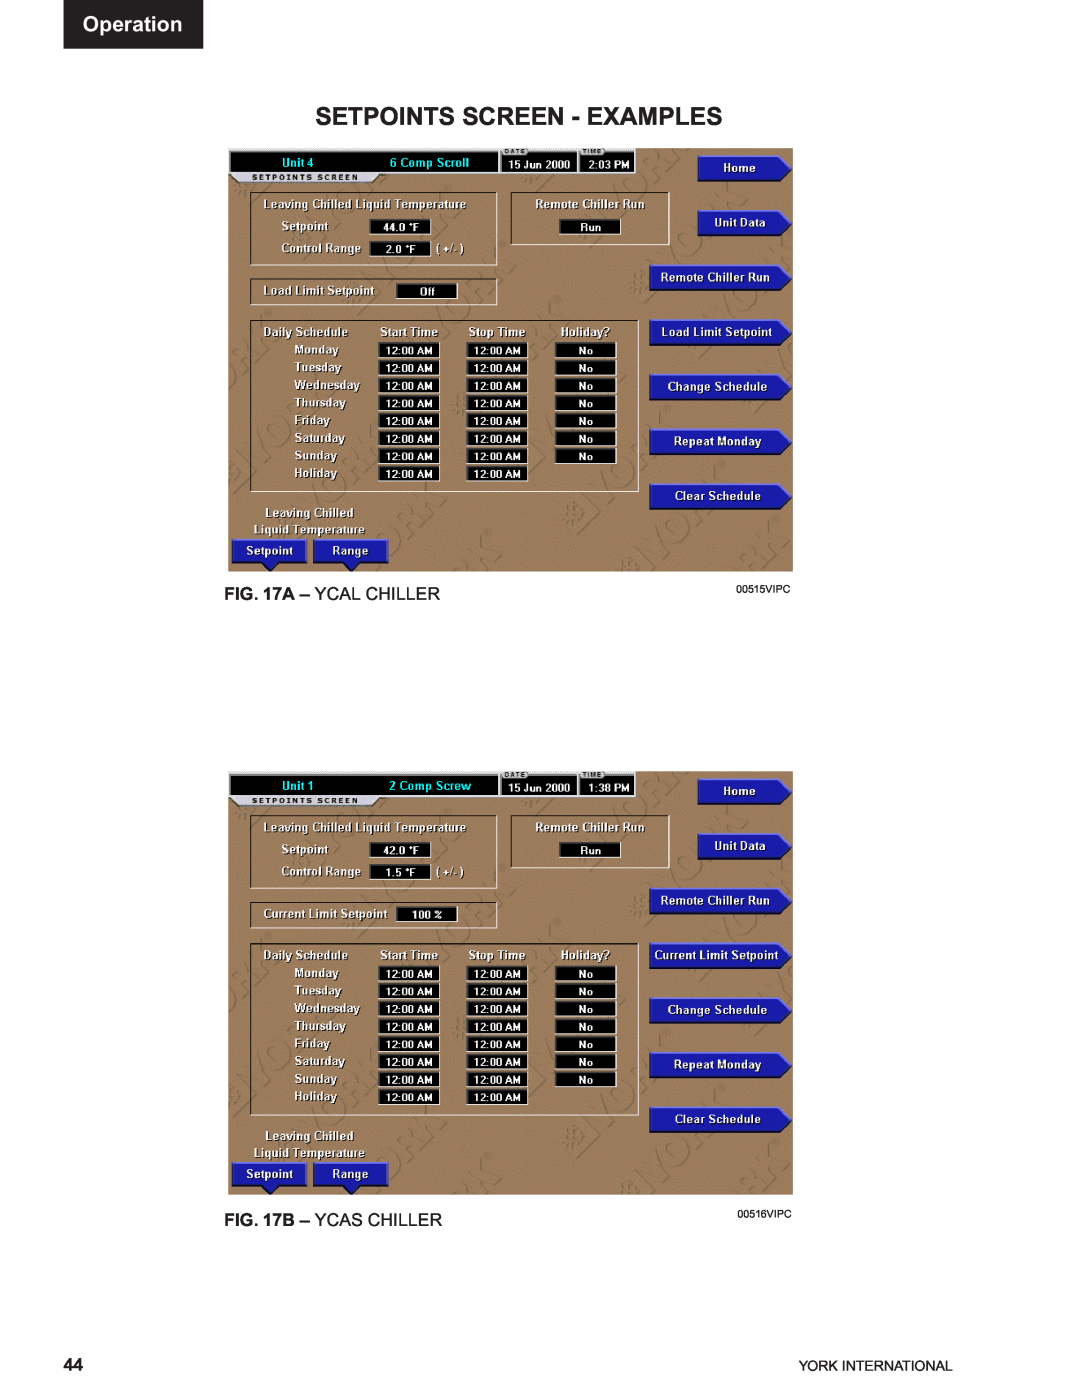 York 00497VIP manual Setpoints Screen - Examples, Operation, A – Ycal Chiller B – Ycas Chiller, 00515VIPC 00516VIPC 